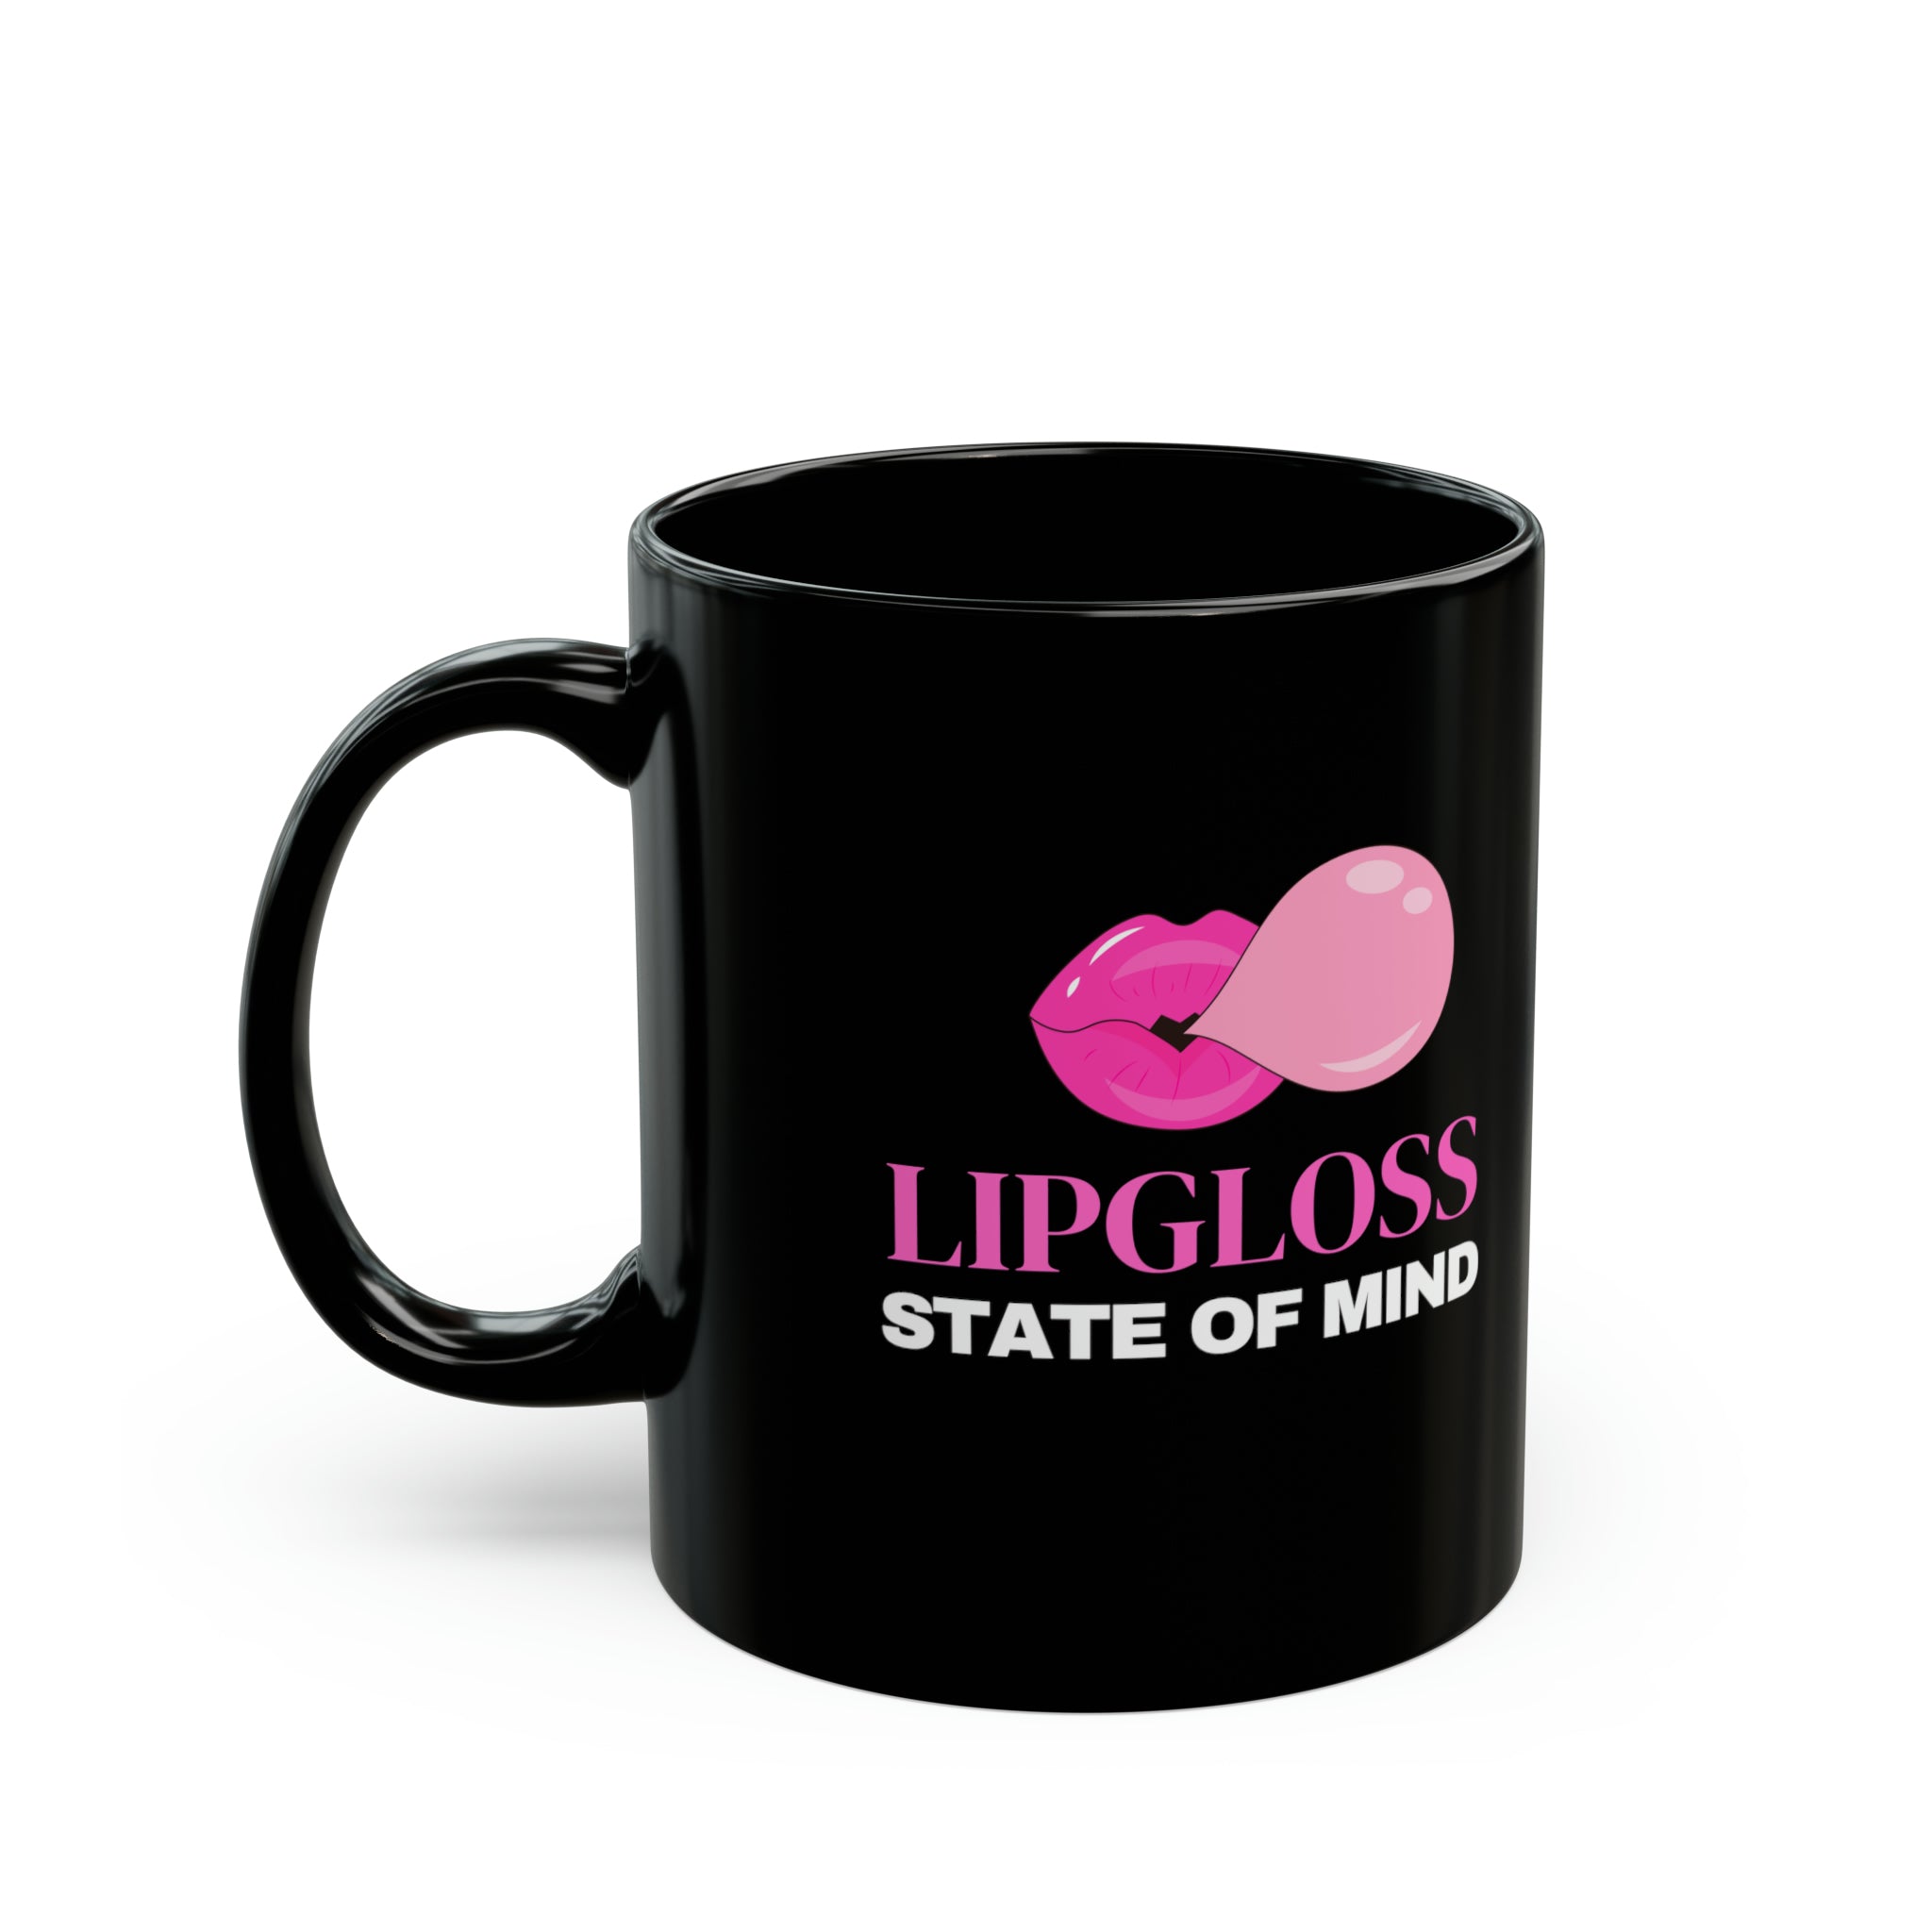 Lipgloss State of Mind (Pink Lips) 11oz Coffee Mug, Makeup Themed Coffee Mug, Beauty Business Mug, Boss Babe Cup Mug  The Middle Aged Groove